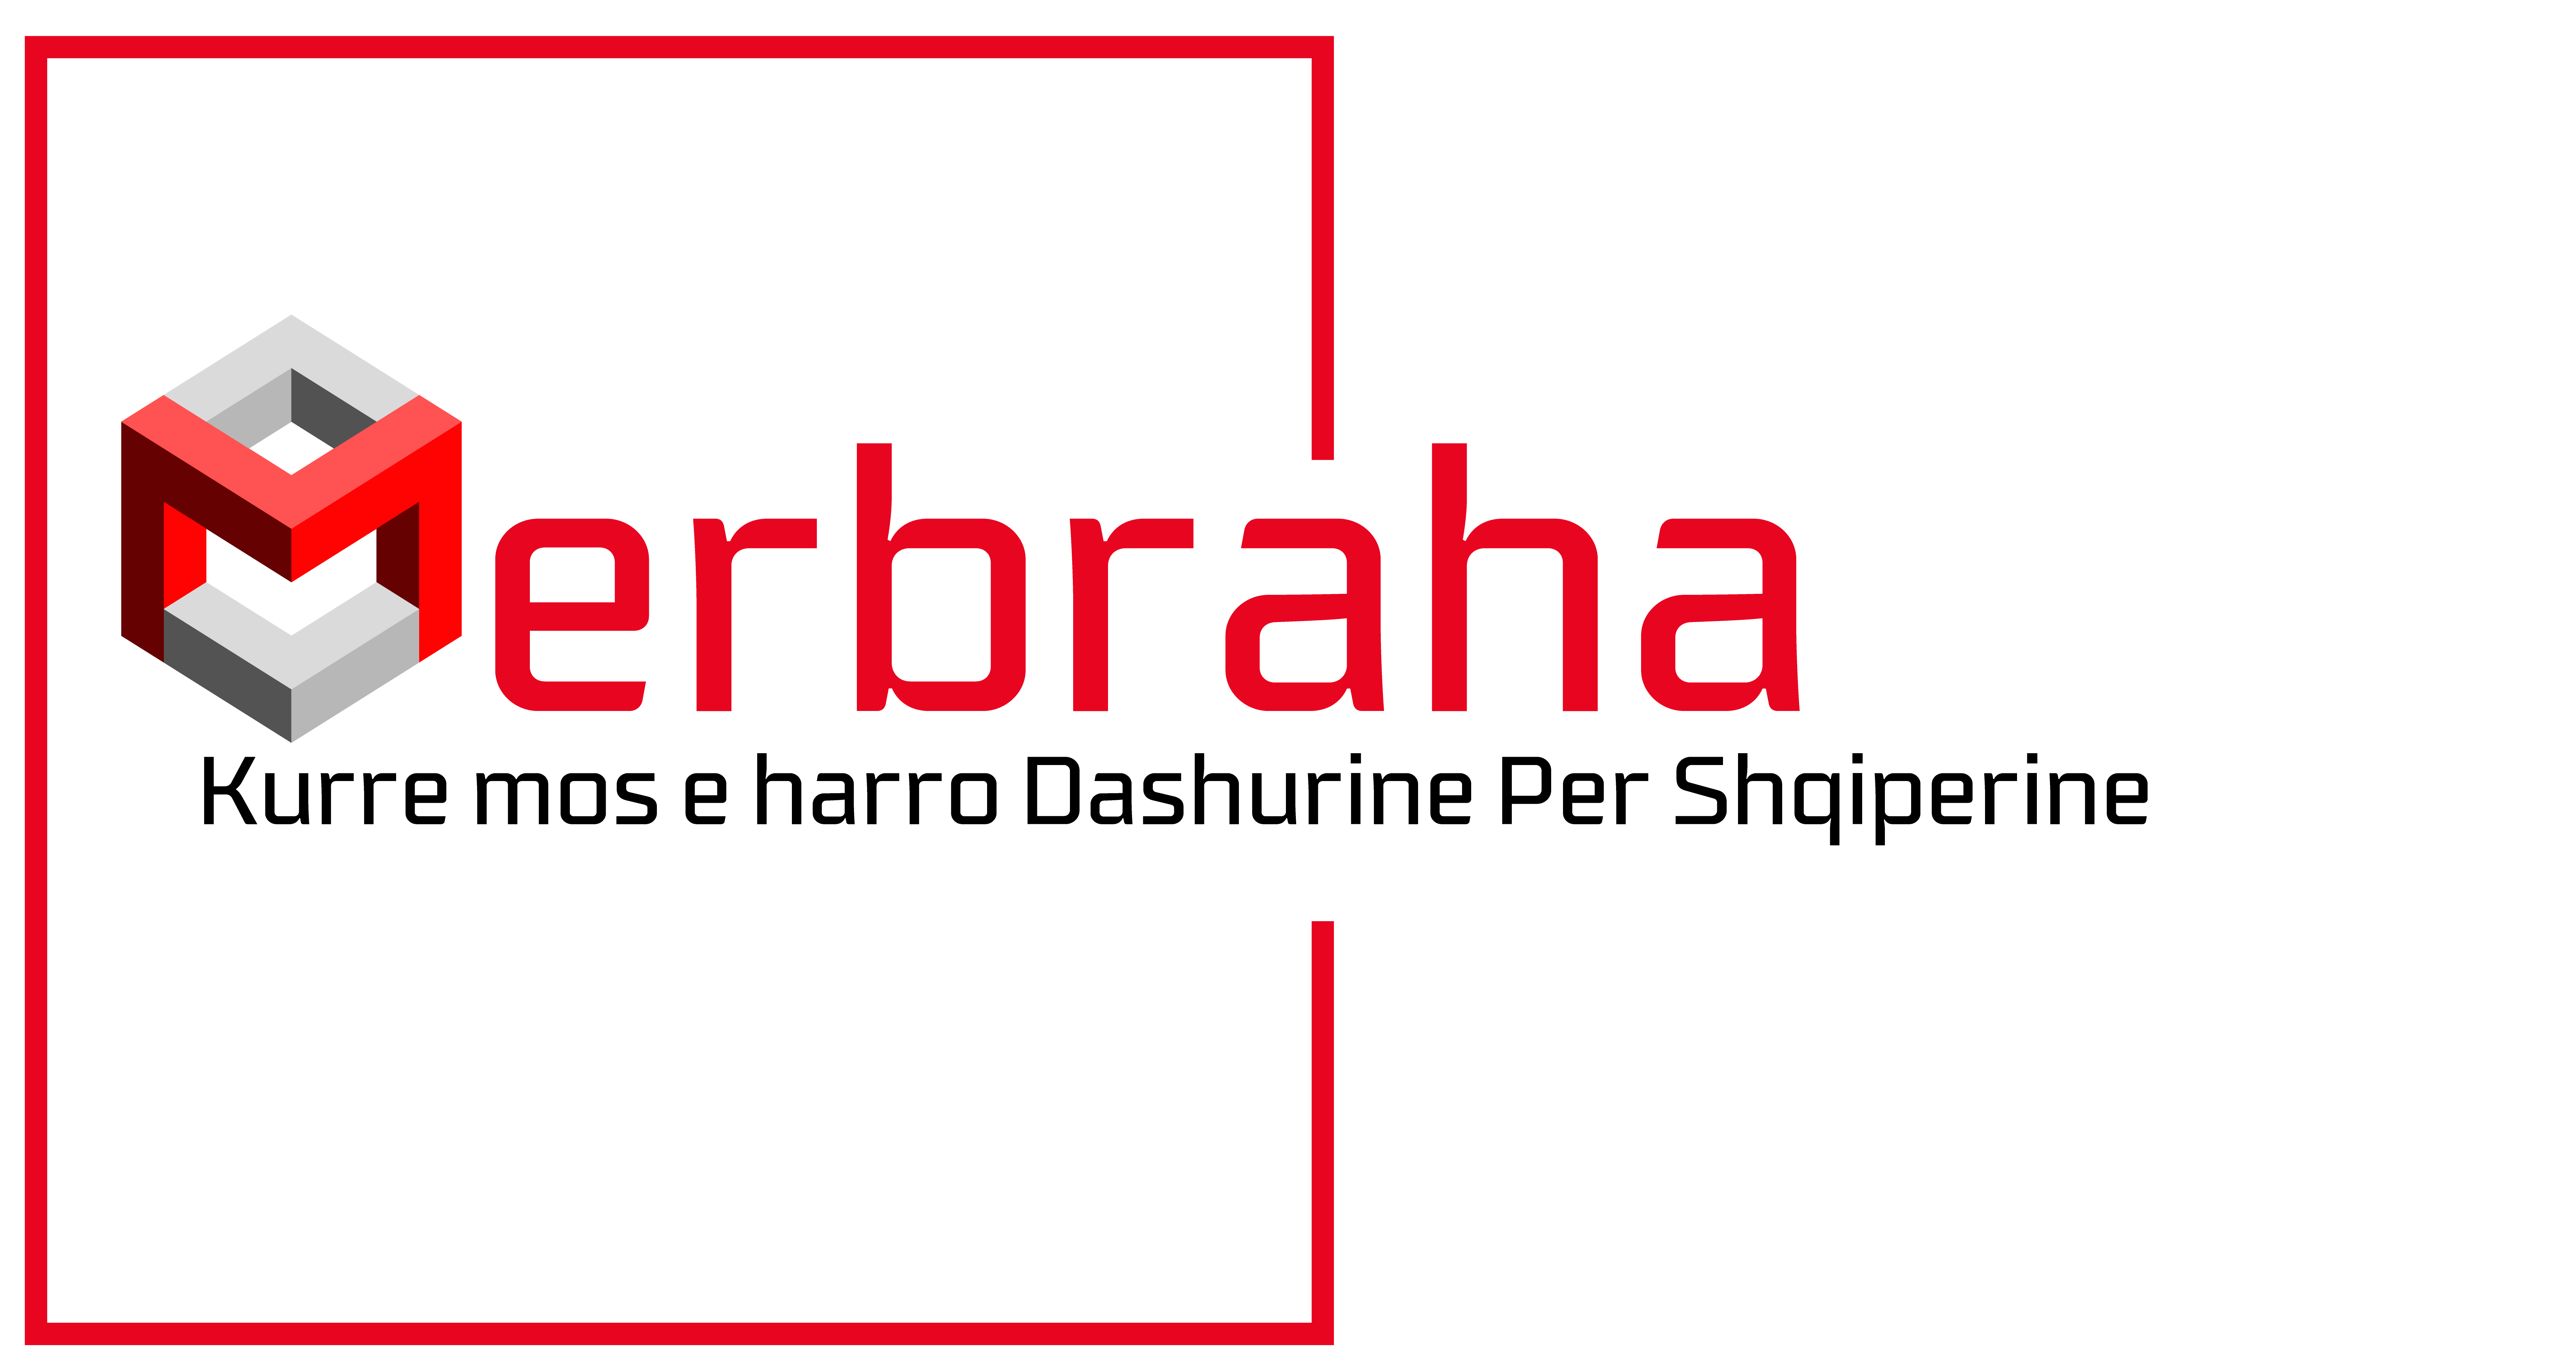 MerBraha